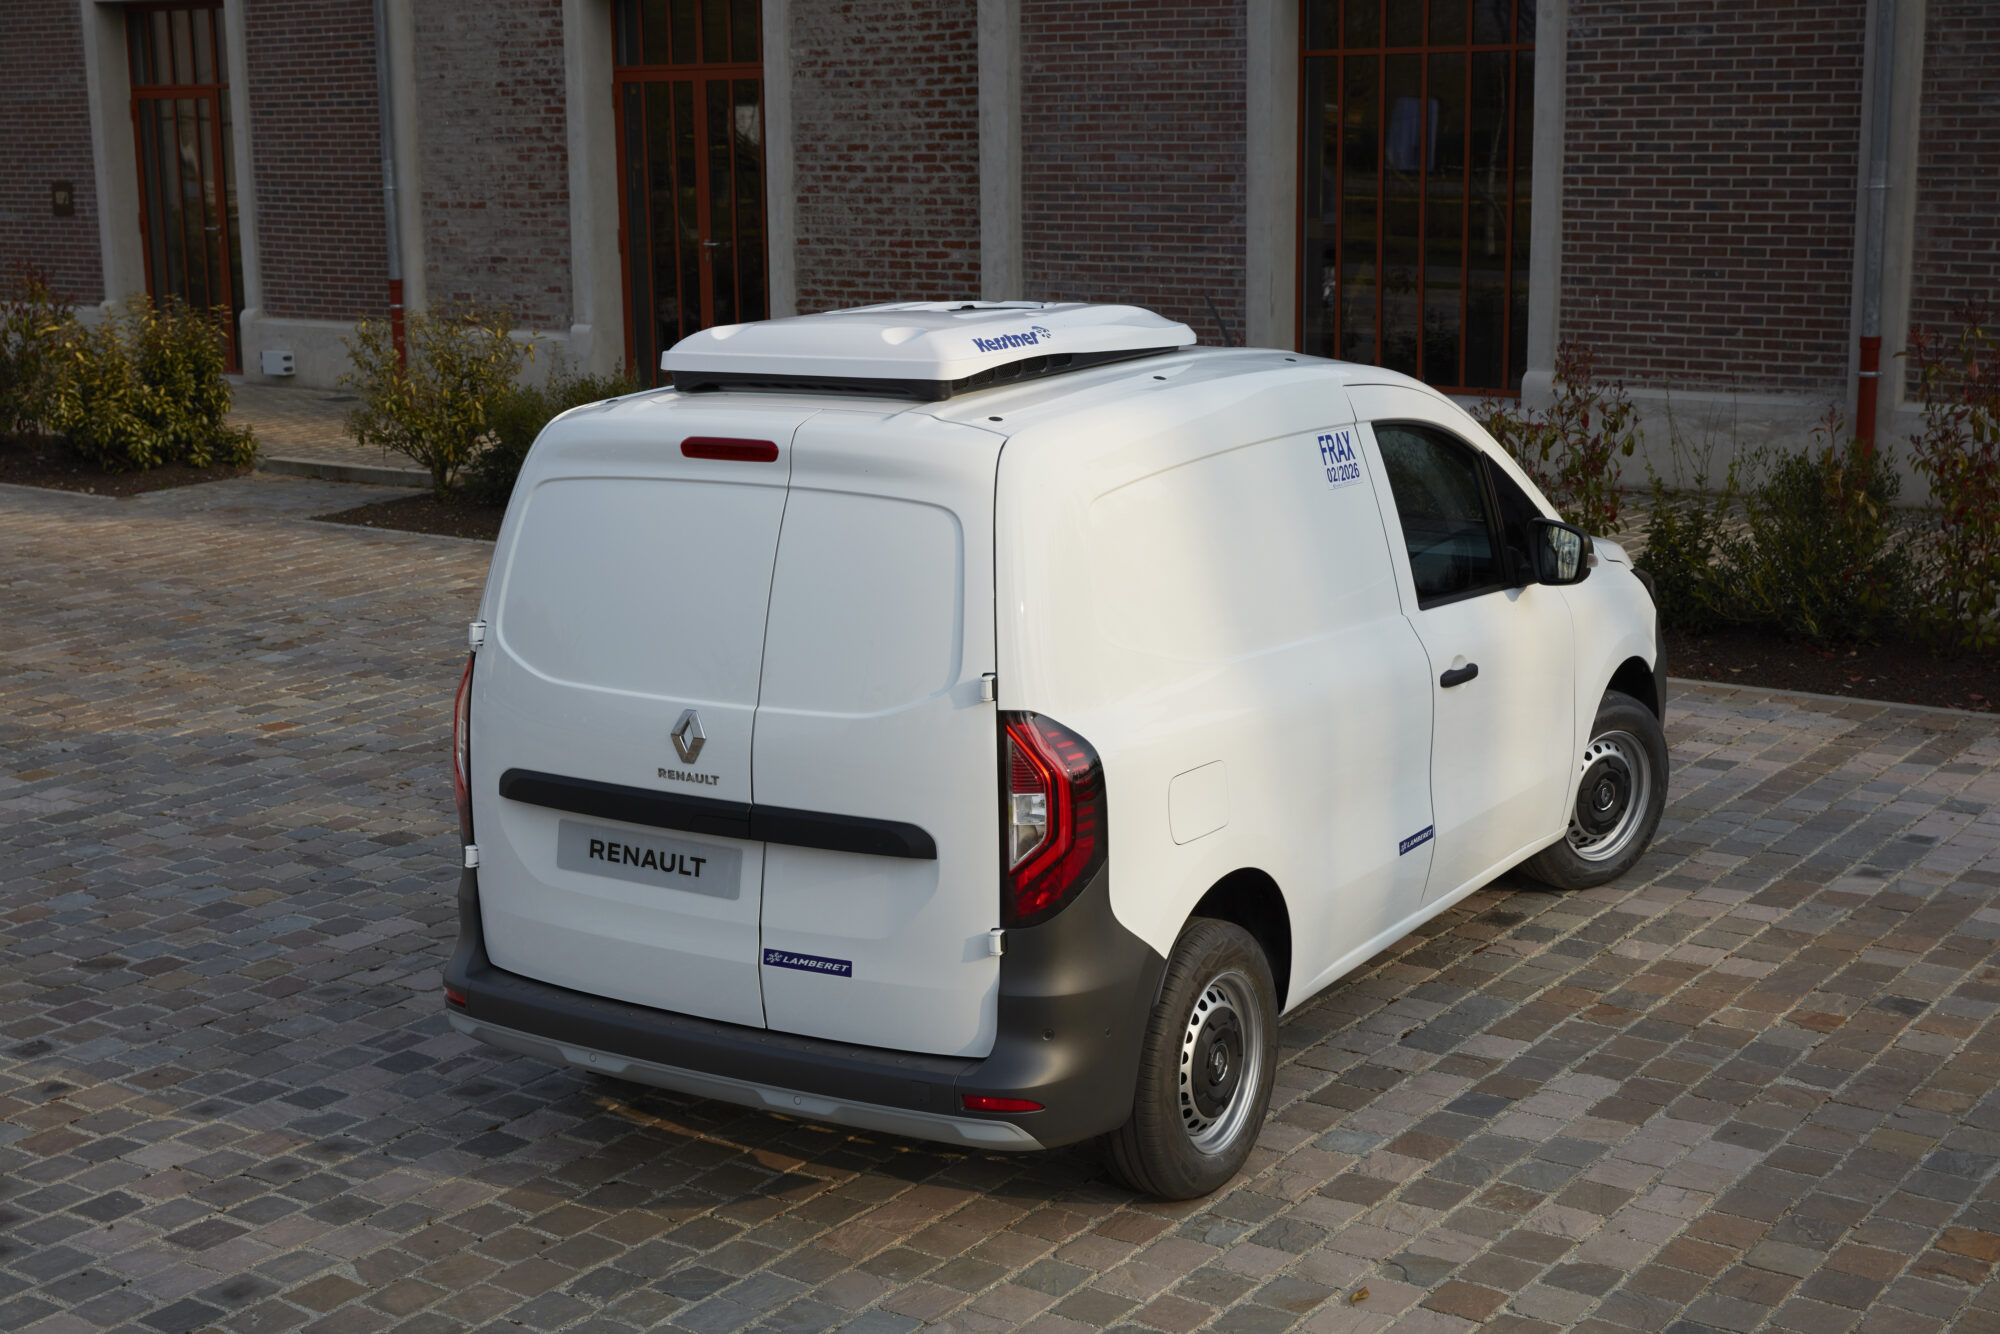 2021 - New Renault Kangoo Van - Tests drive - Converted vehicles